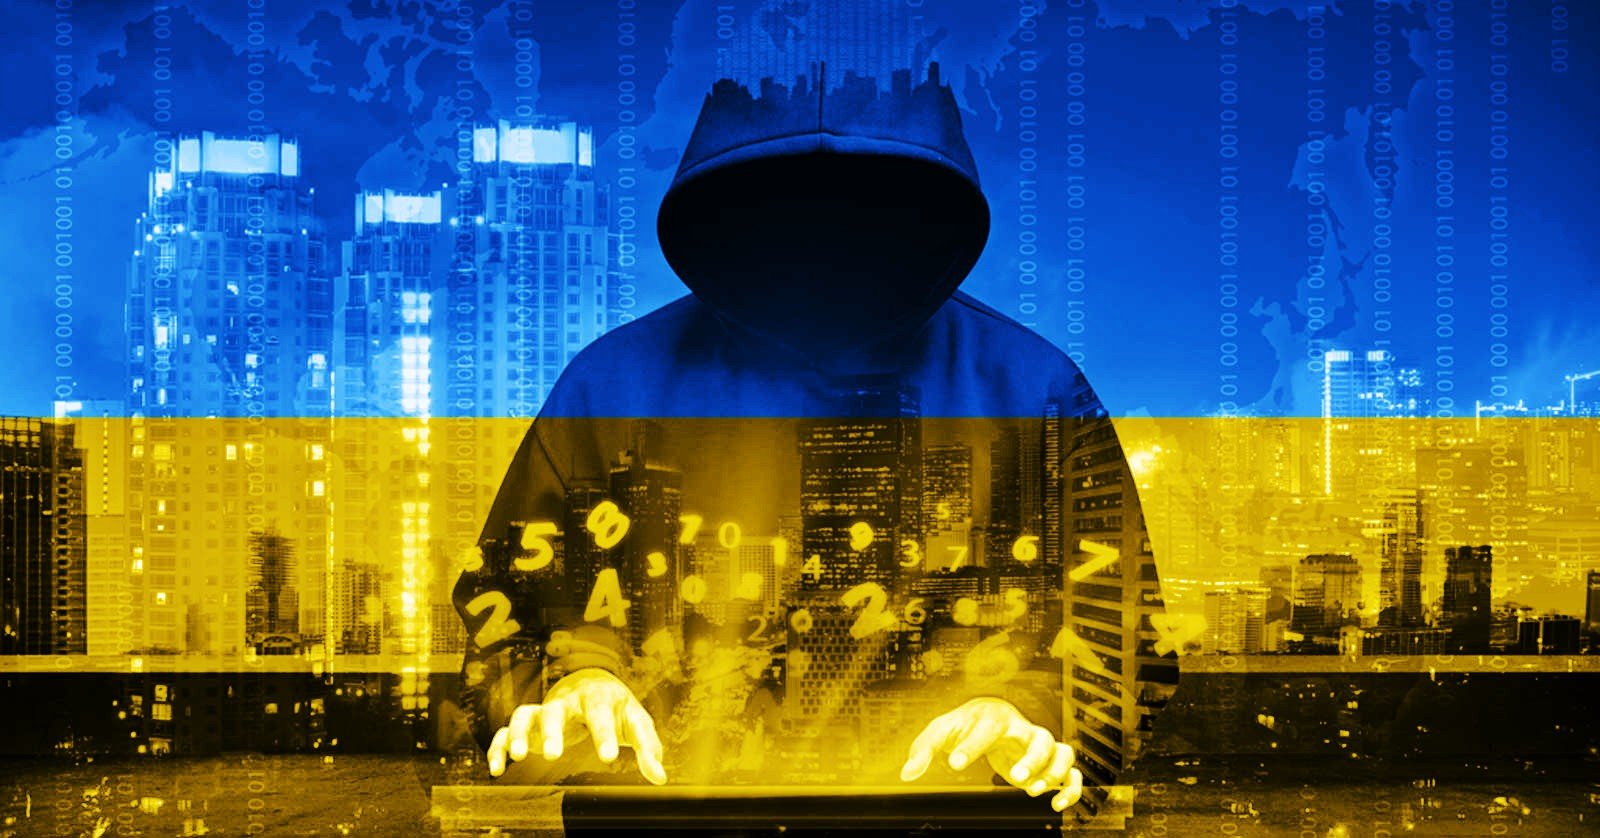 Pro-Ukrainian hacker hacking